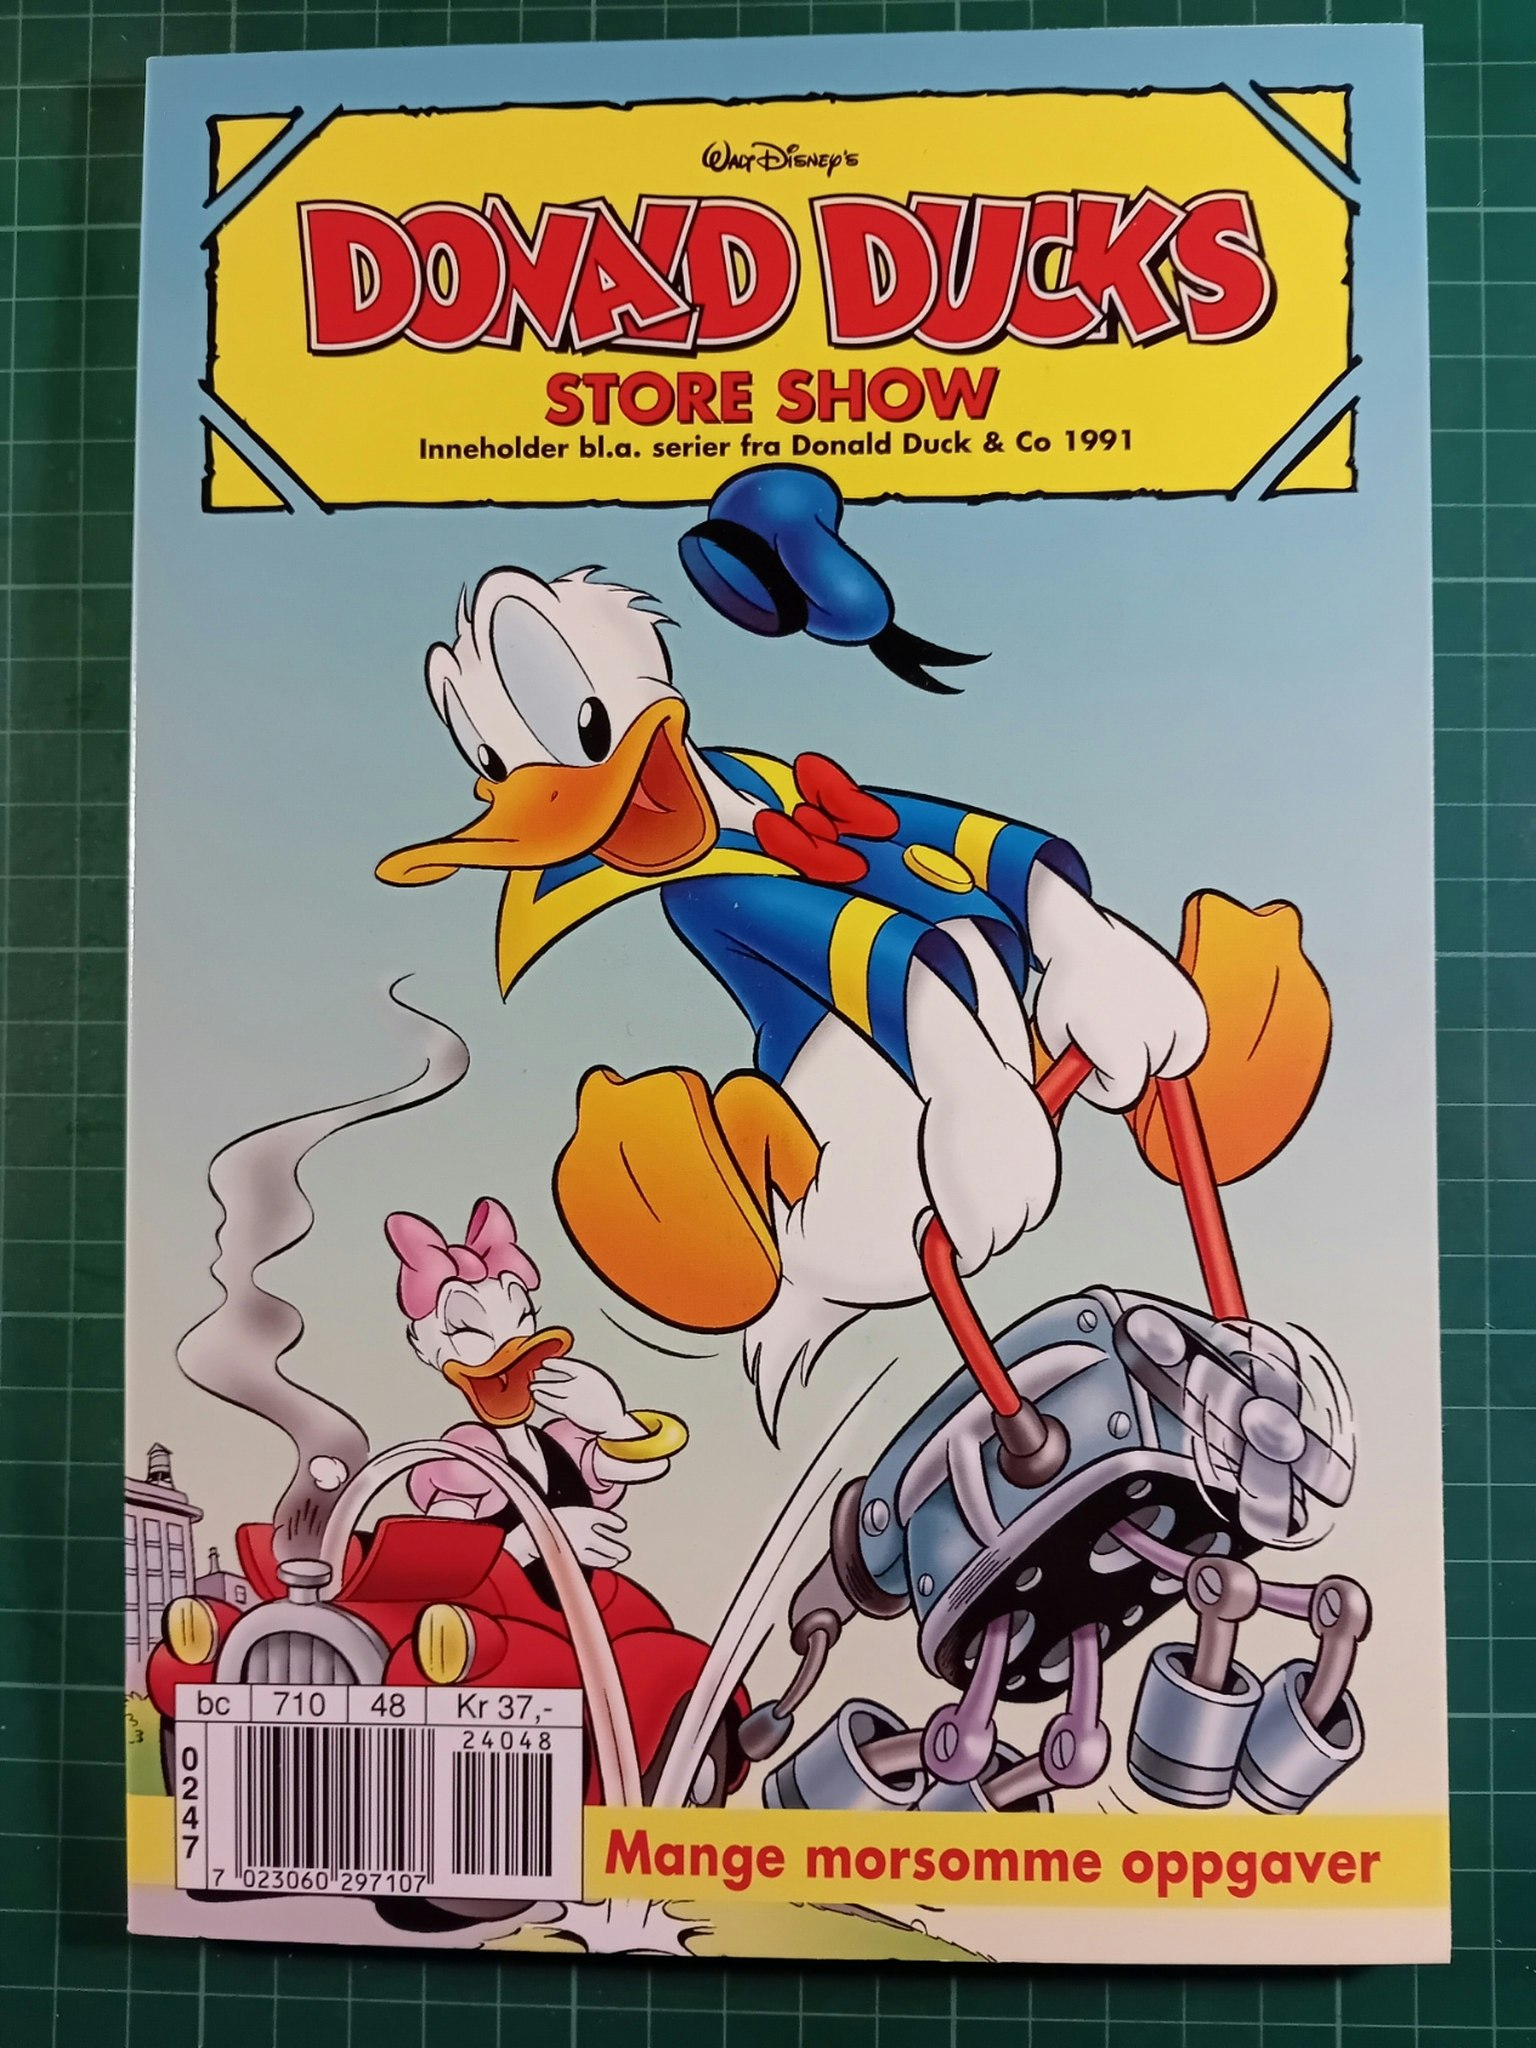 Donald Ducks 2002 Store show